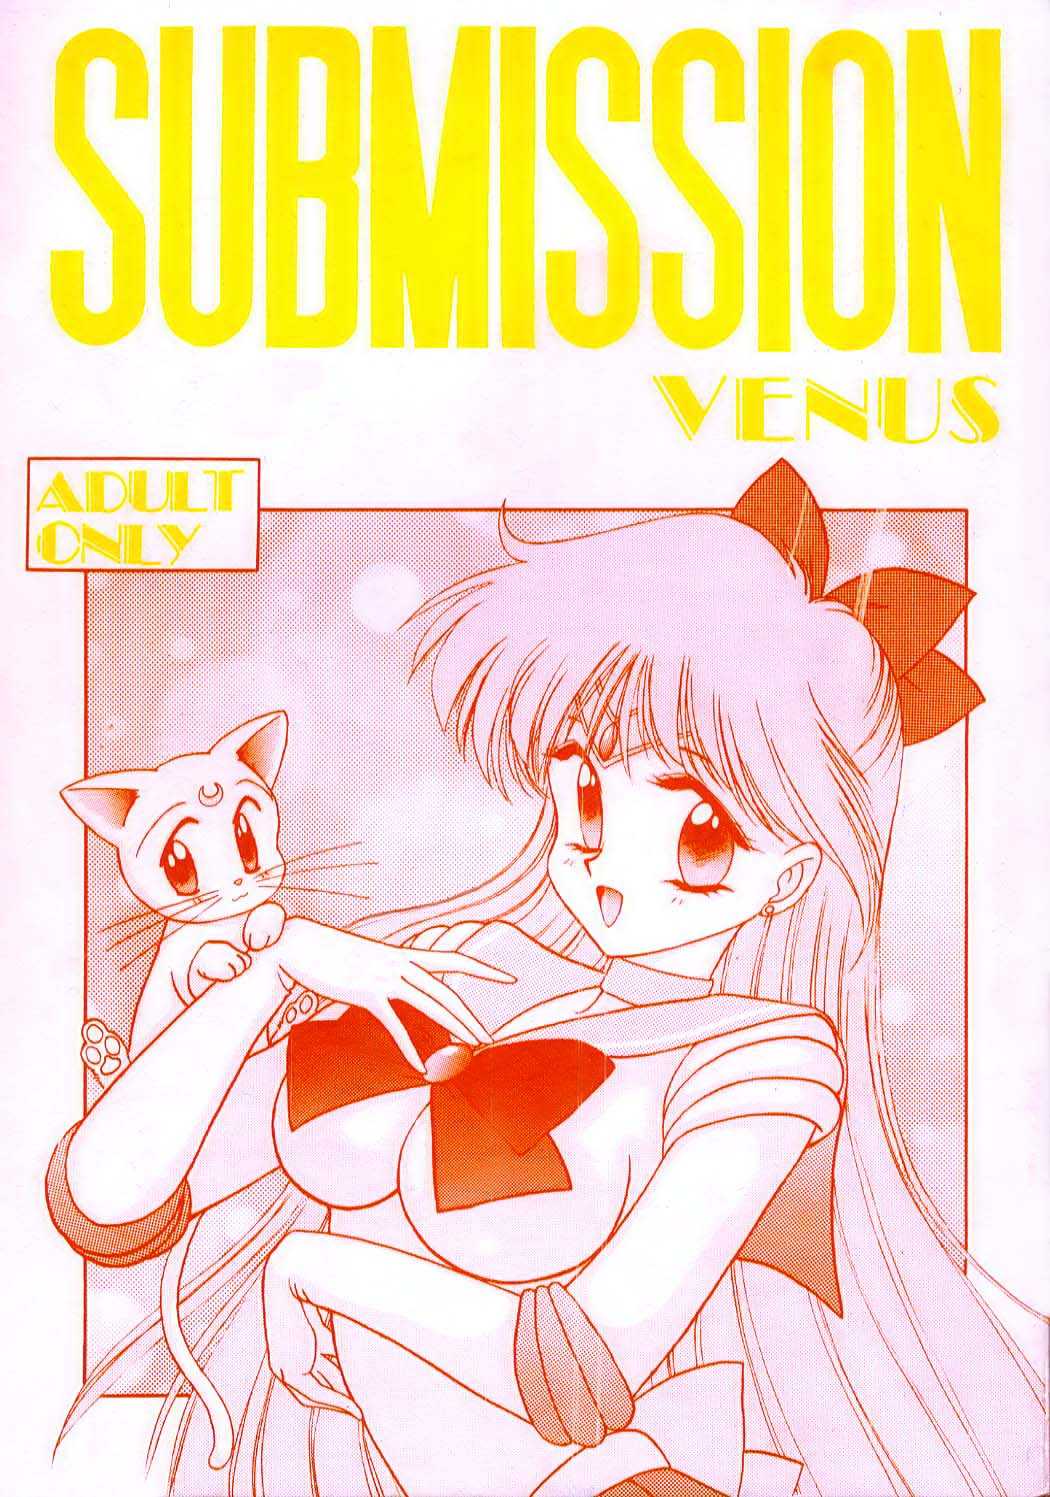 [BLACK DOG] [1995-05-25] Submission Venus 